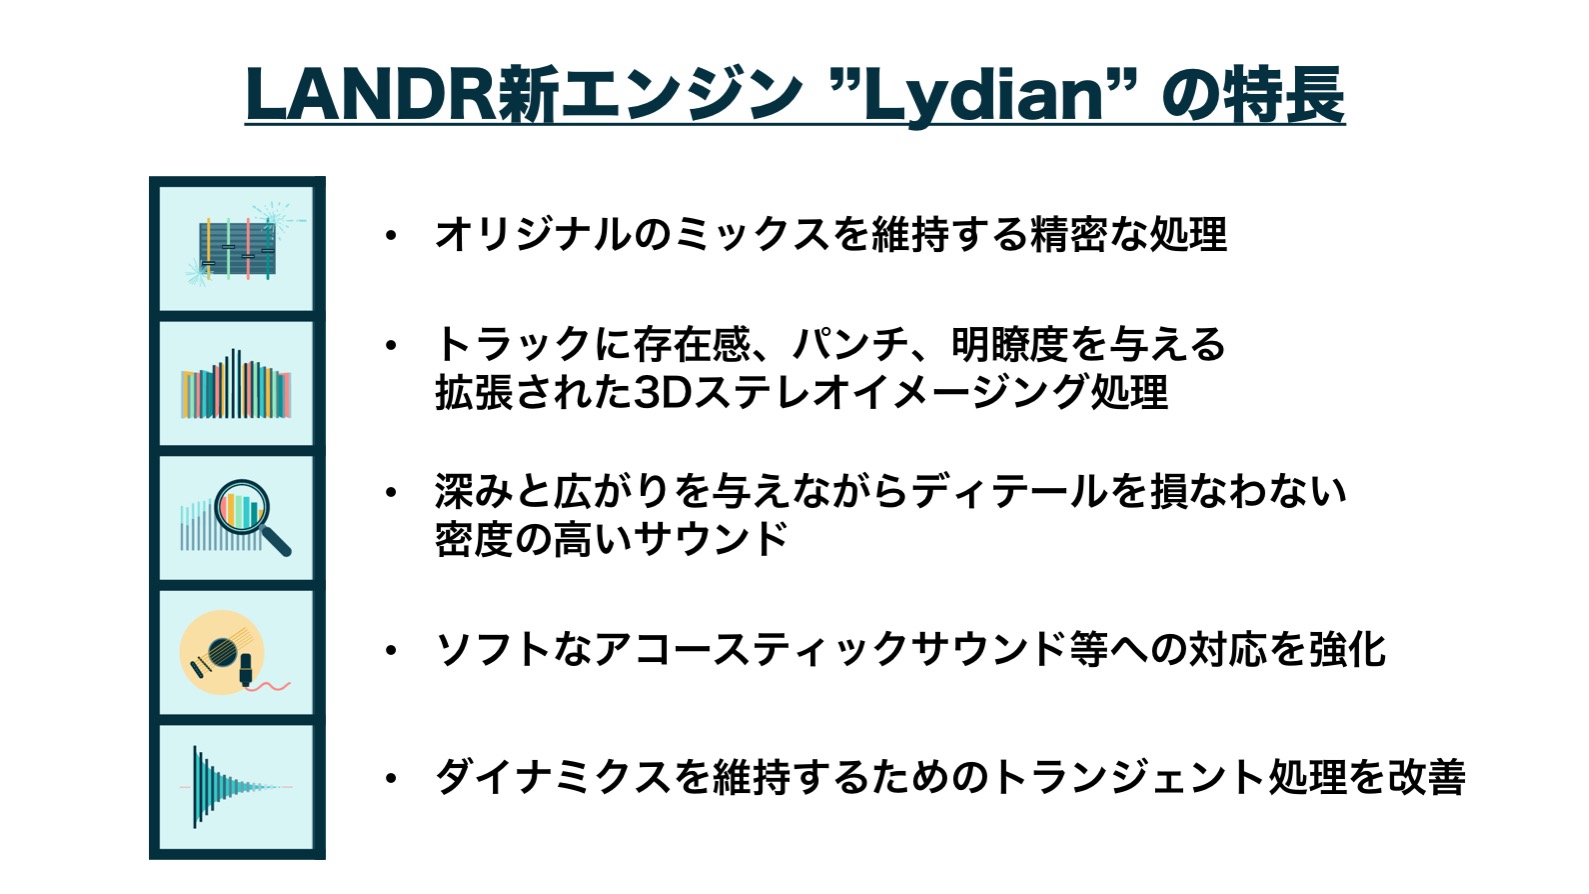 LANDR_Lydian